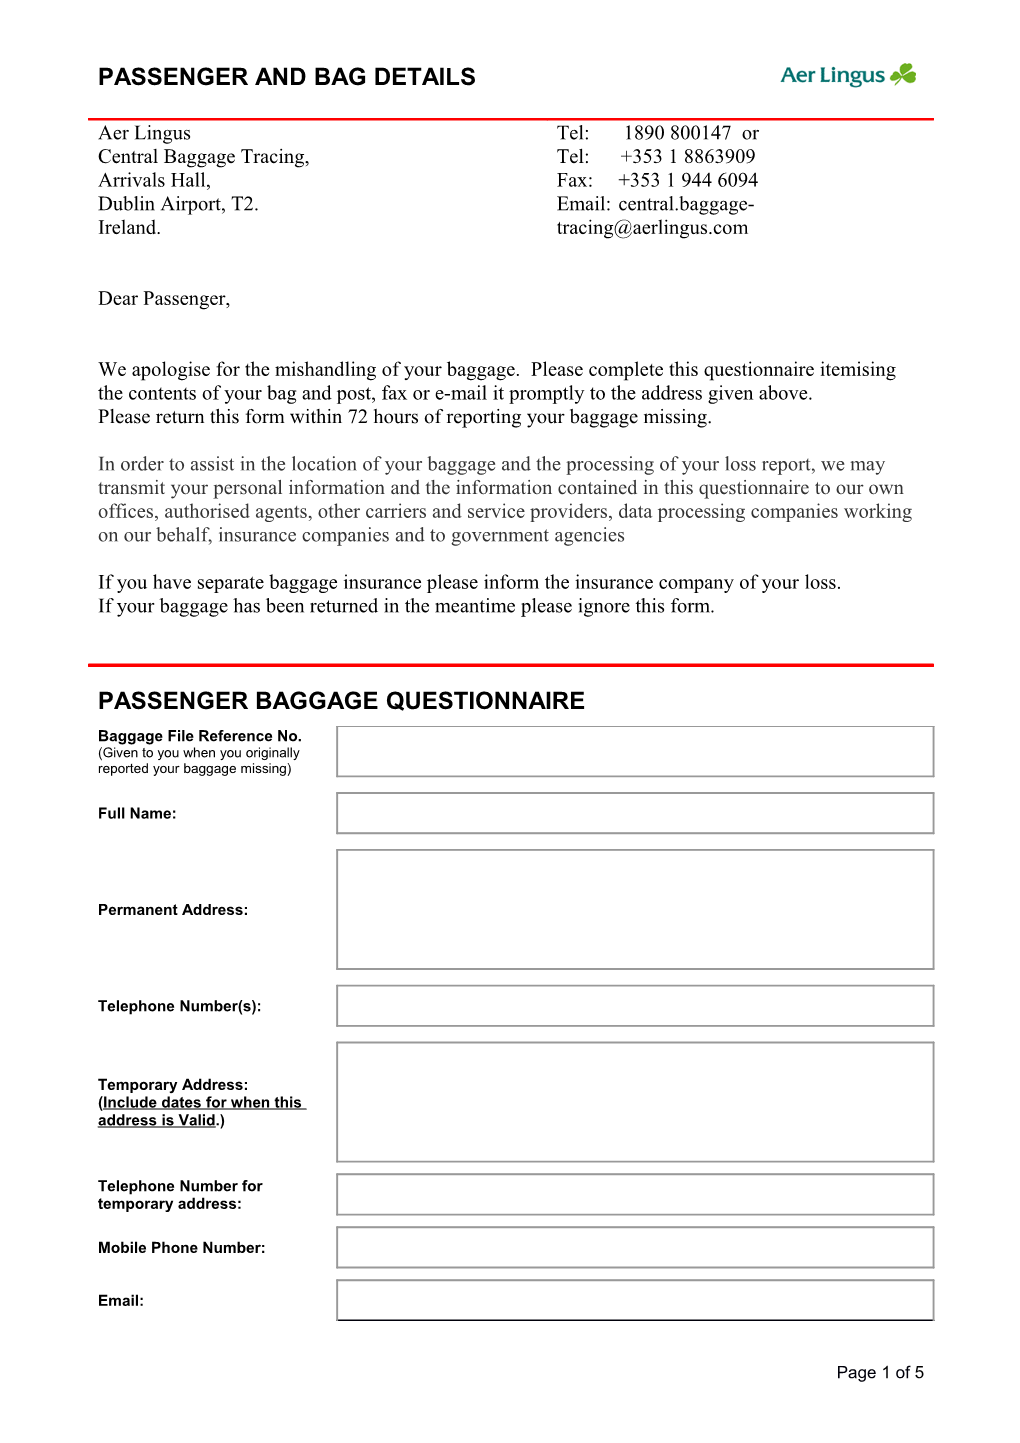 Passenger Baggage Questionnaire